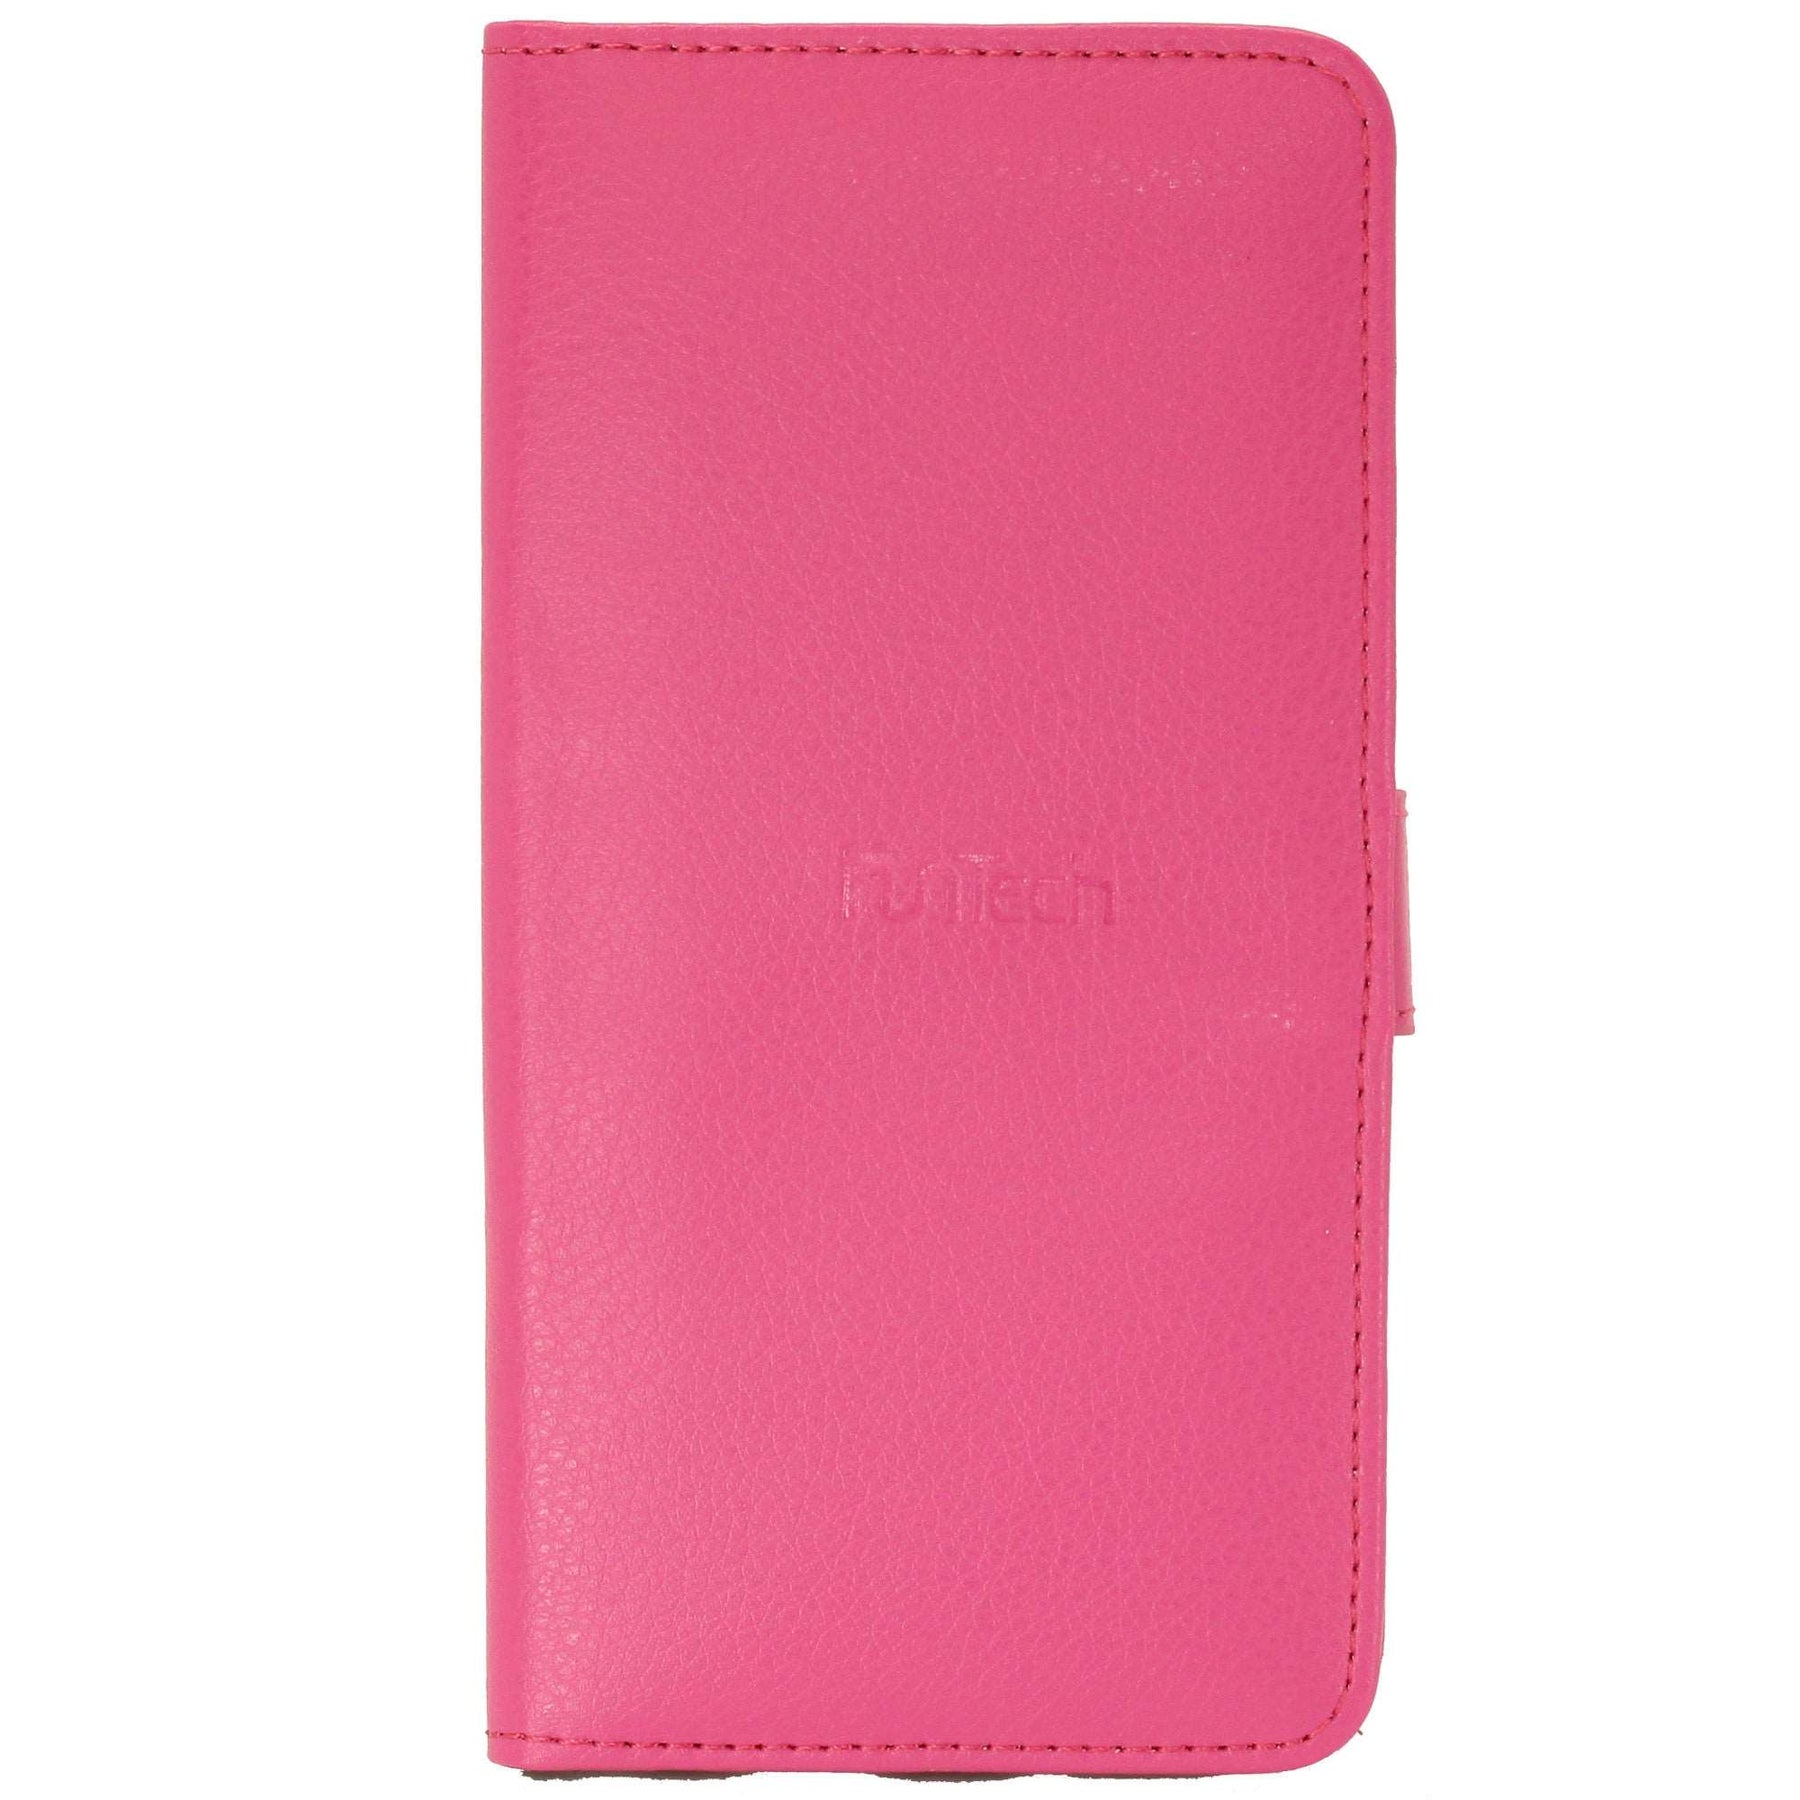 iPhone 6/6s Plus wallet case pink